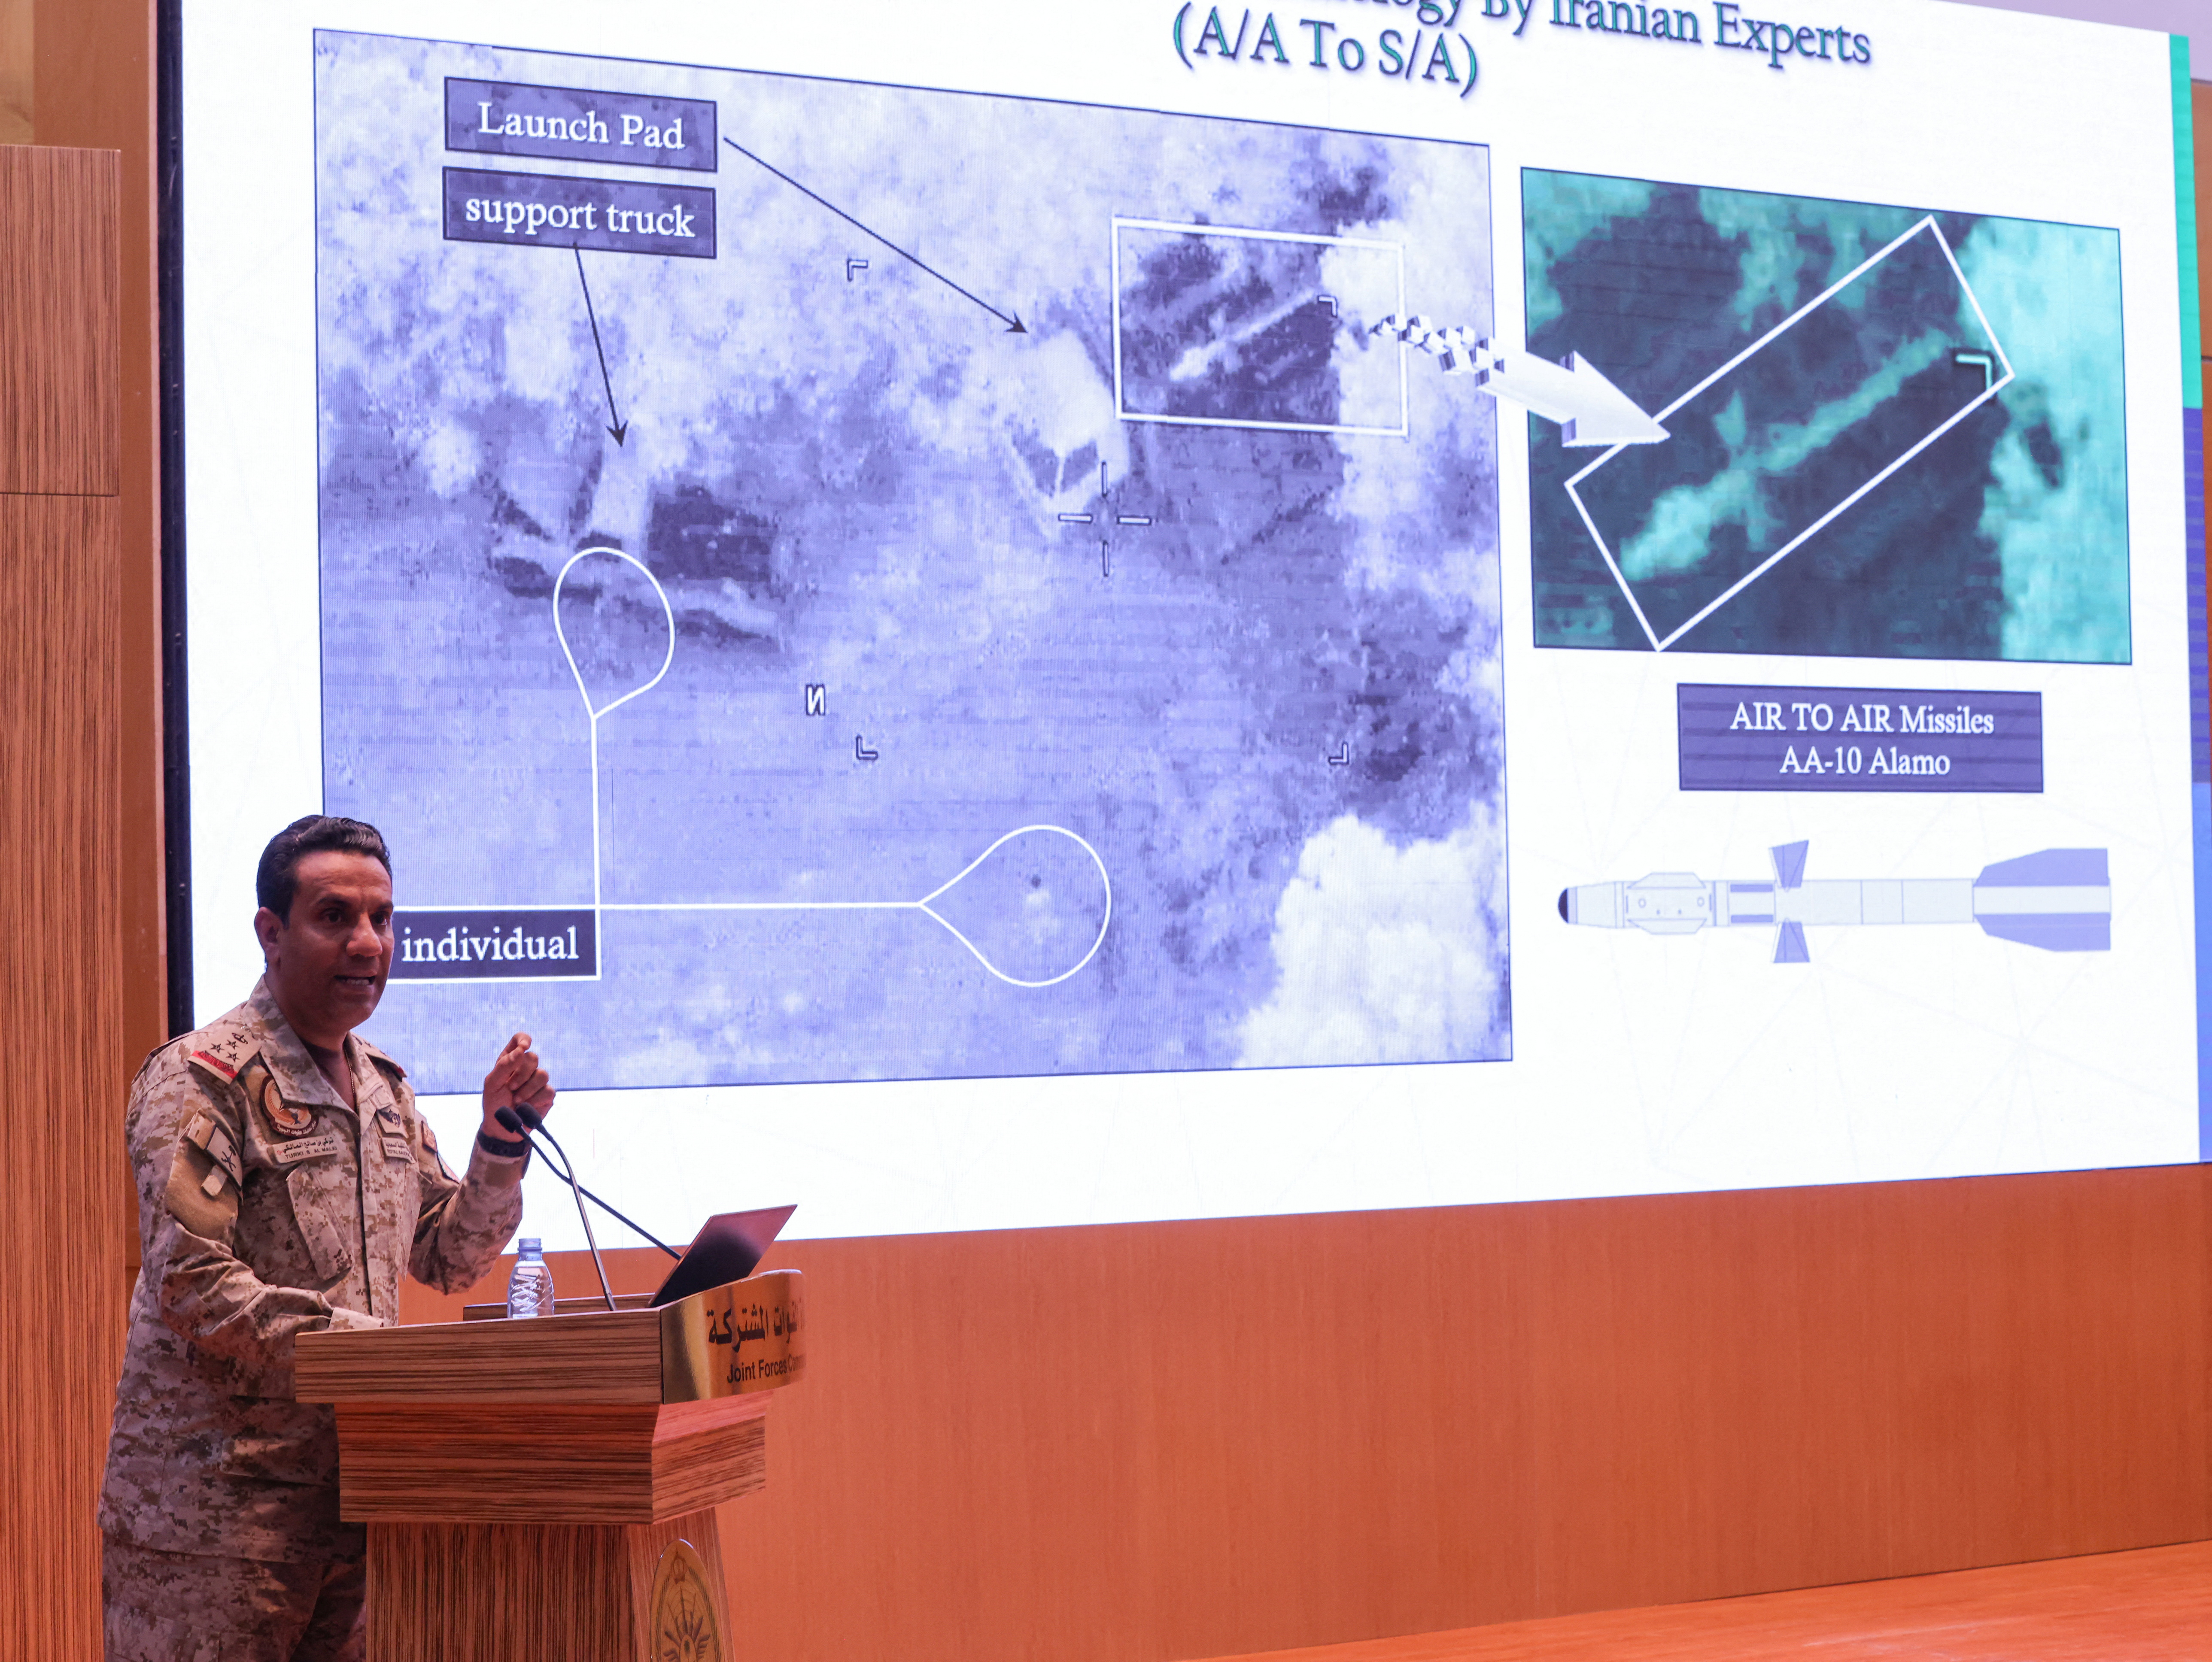 Saudi-led coalition spokesperson, Colonel Turki al-Malki speaks during a news conference in Riyadh